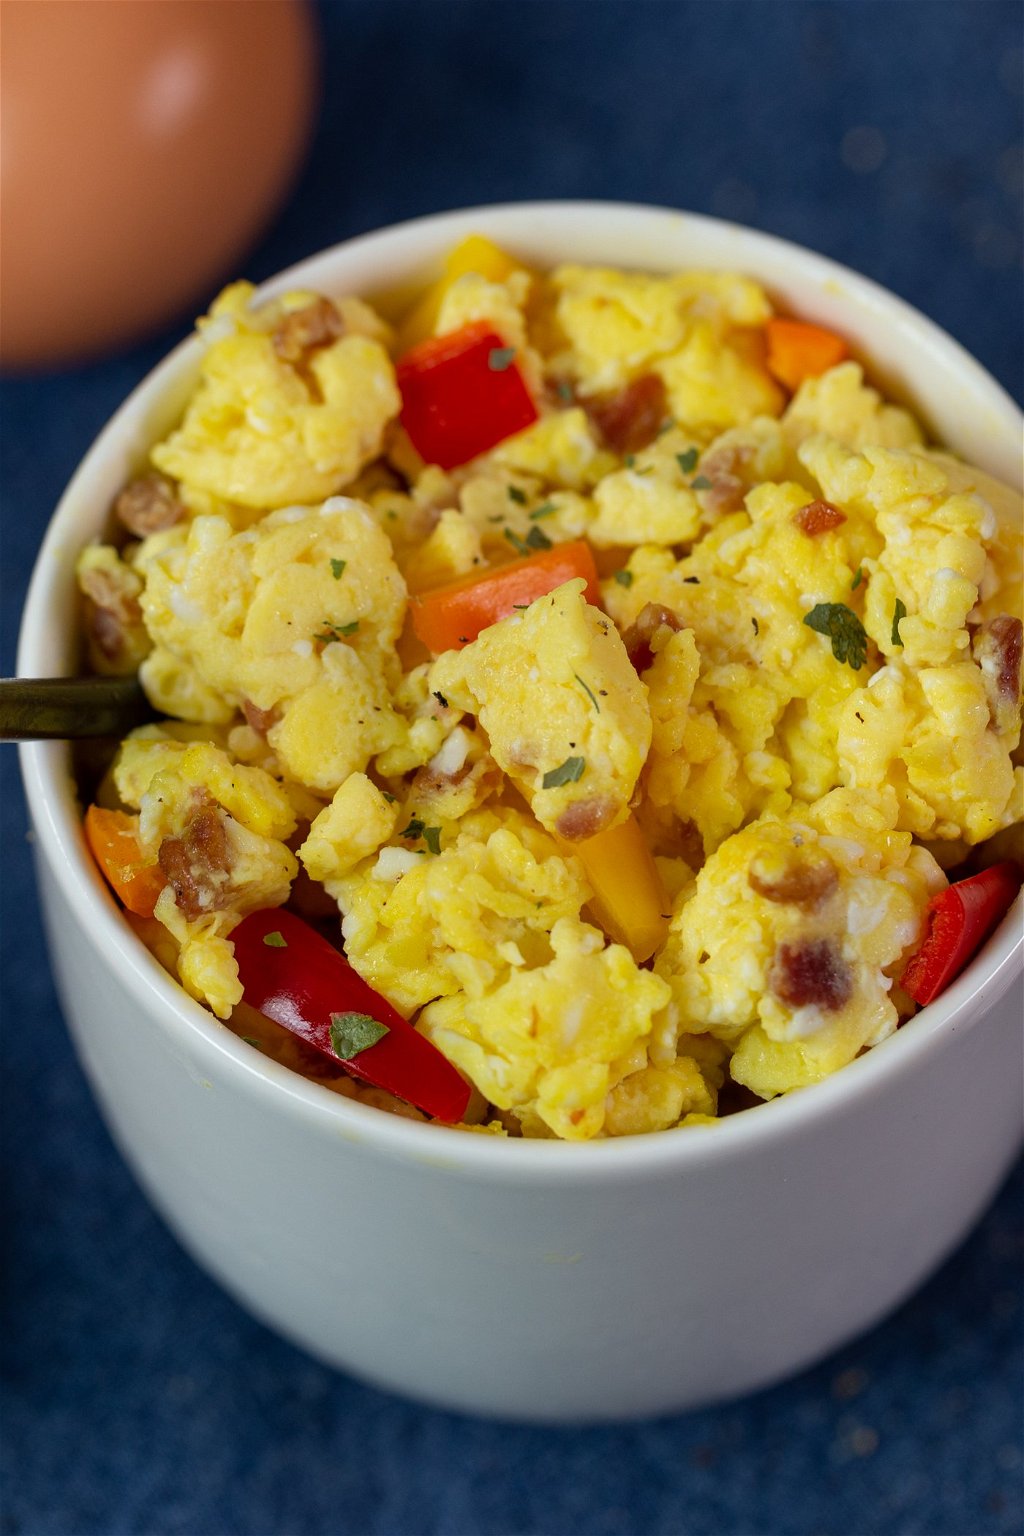 Microwave Scrambled Eggs in a Mug Recipe - The Protein Chef